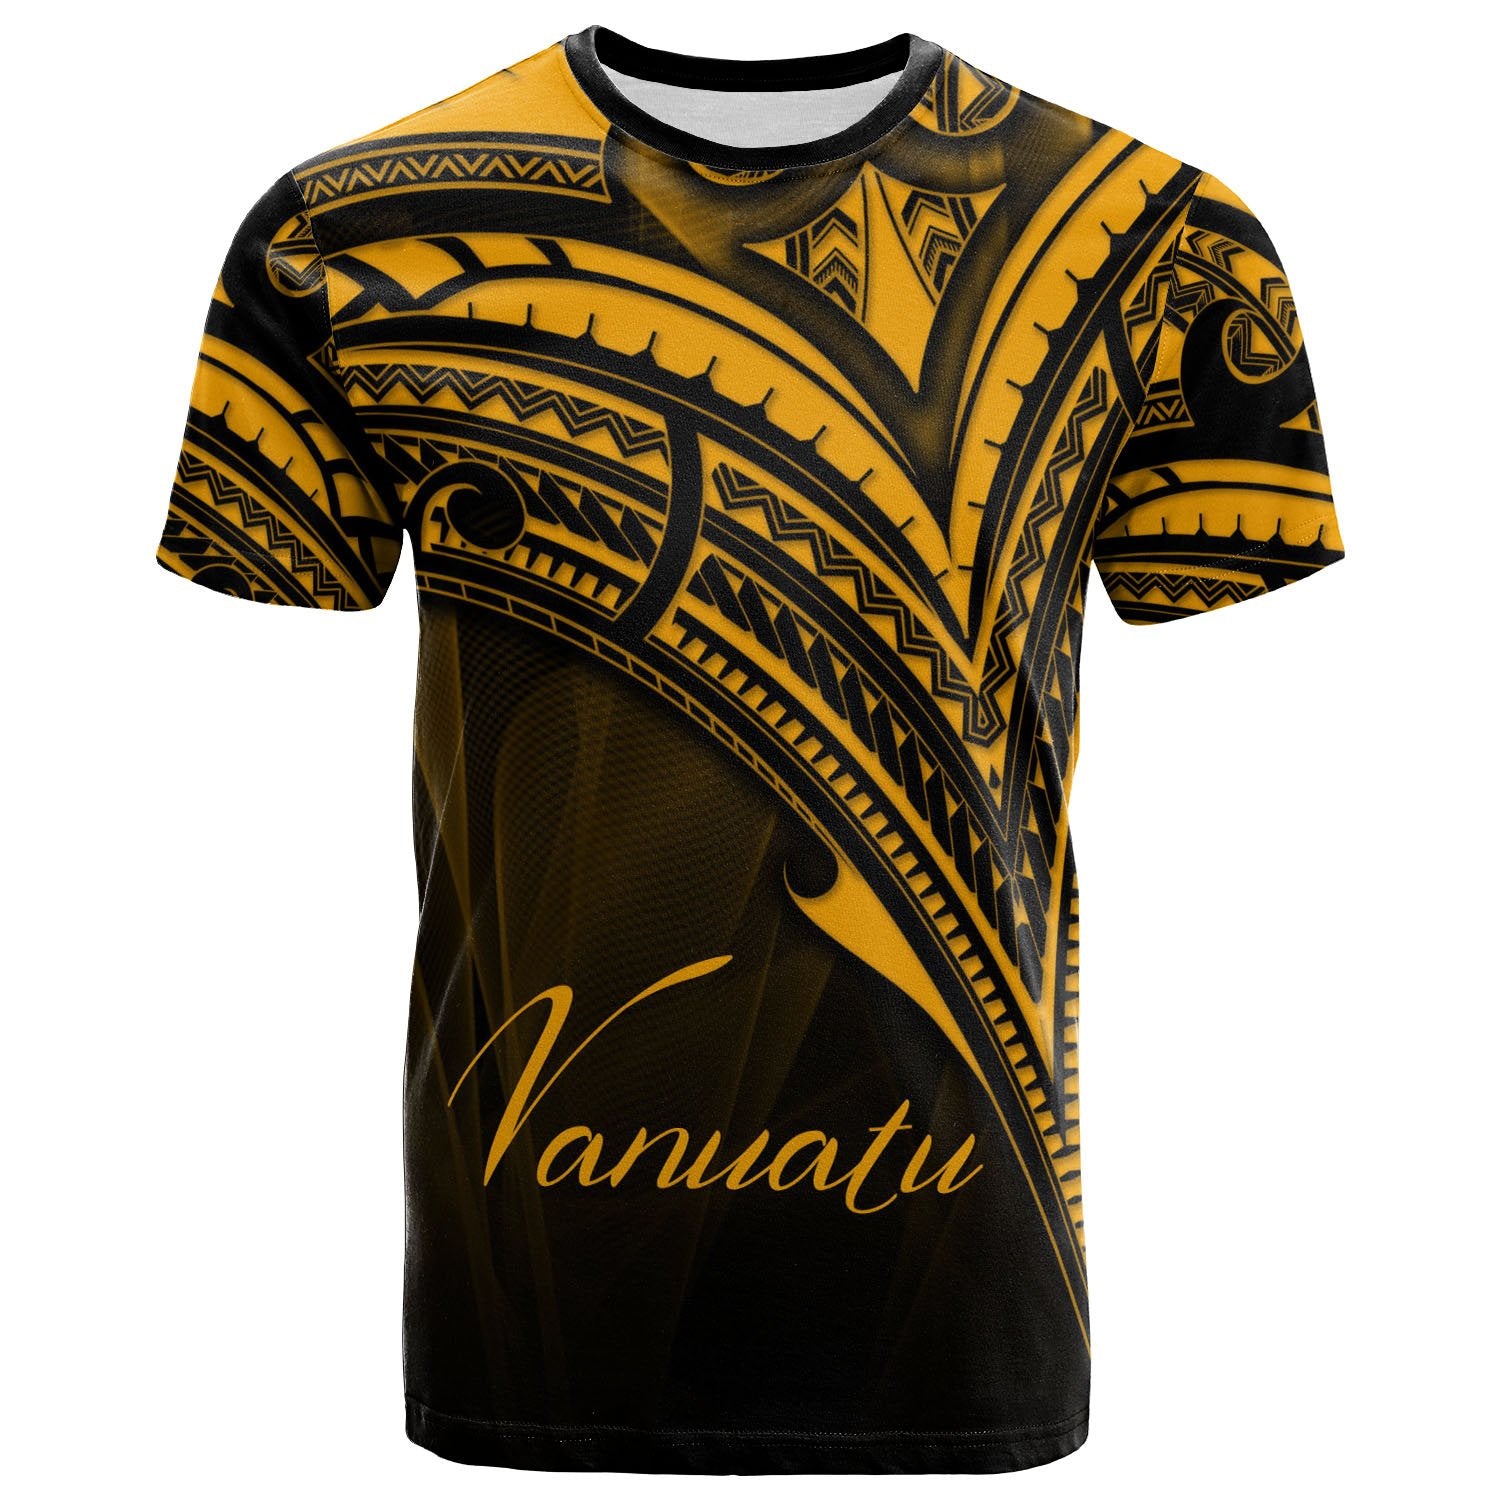 Vanuatu T Shirt Gold Color Cross Style Unisex Black - Polynesian Pride